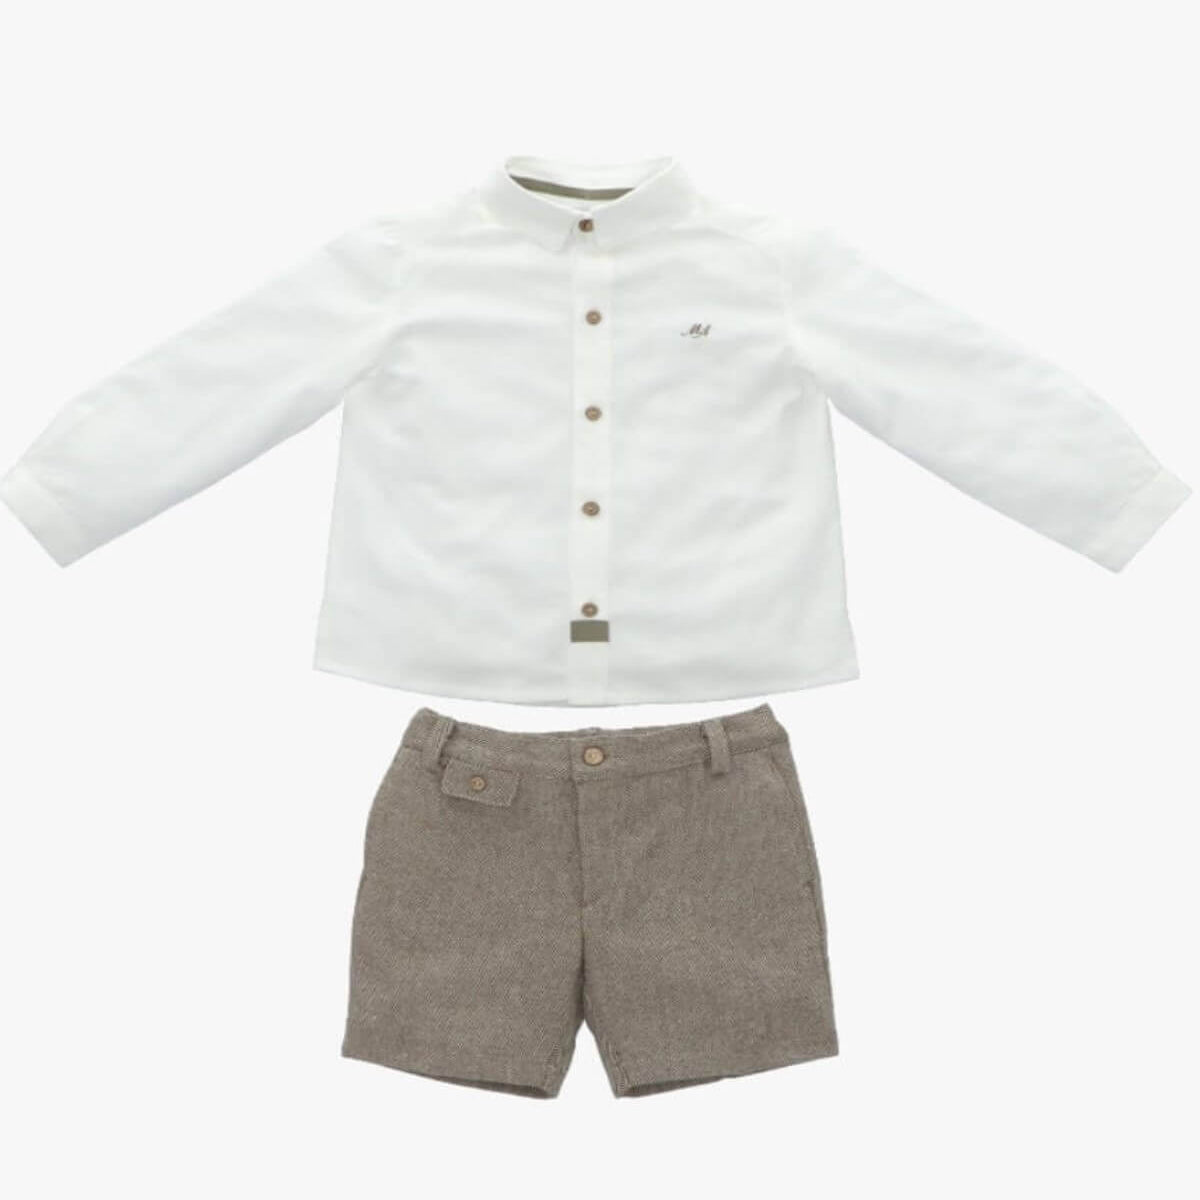 boys Shirt and Shorts Set by martin aranda